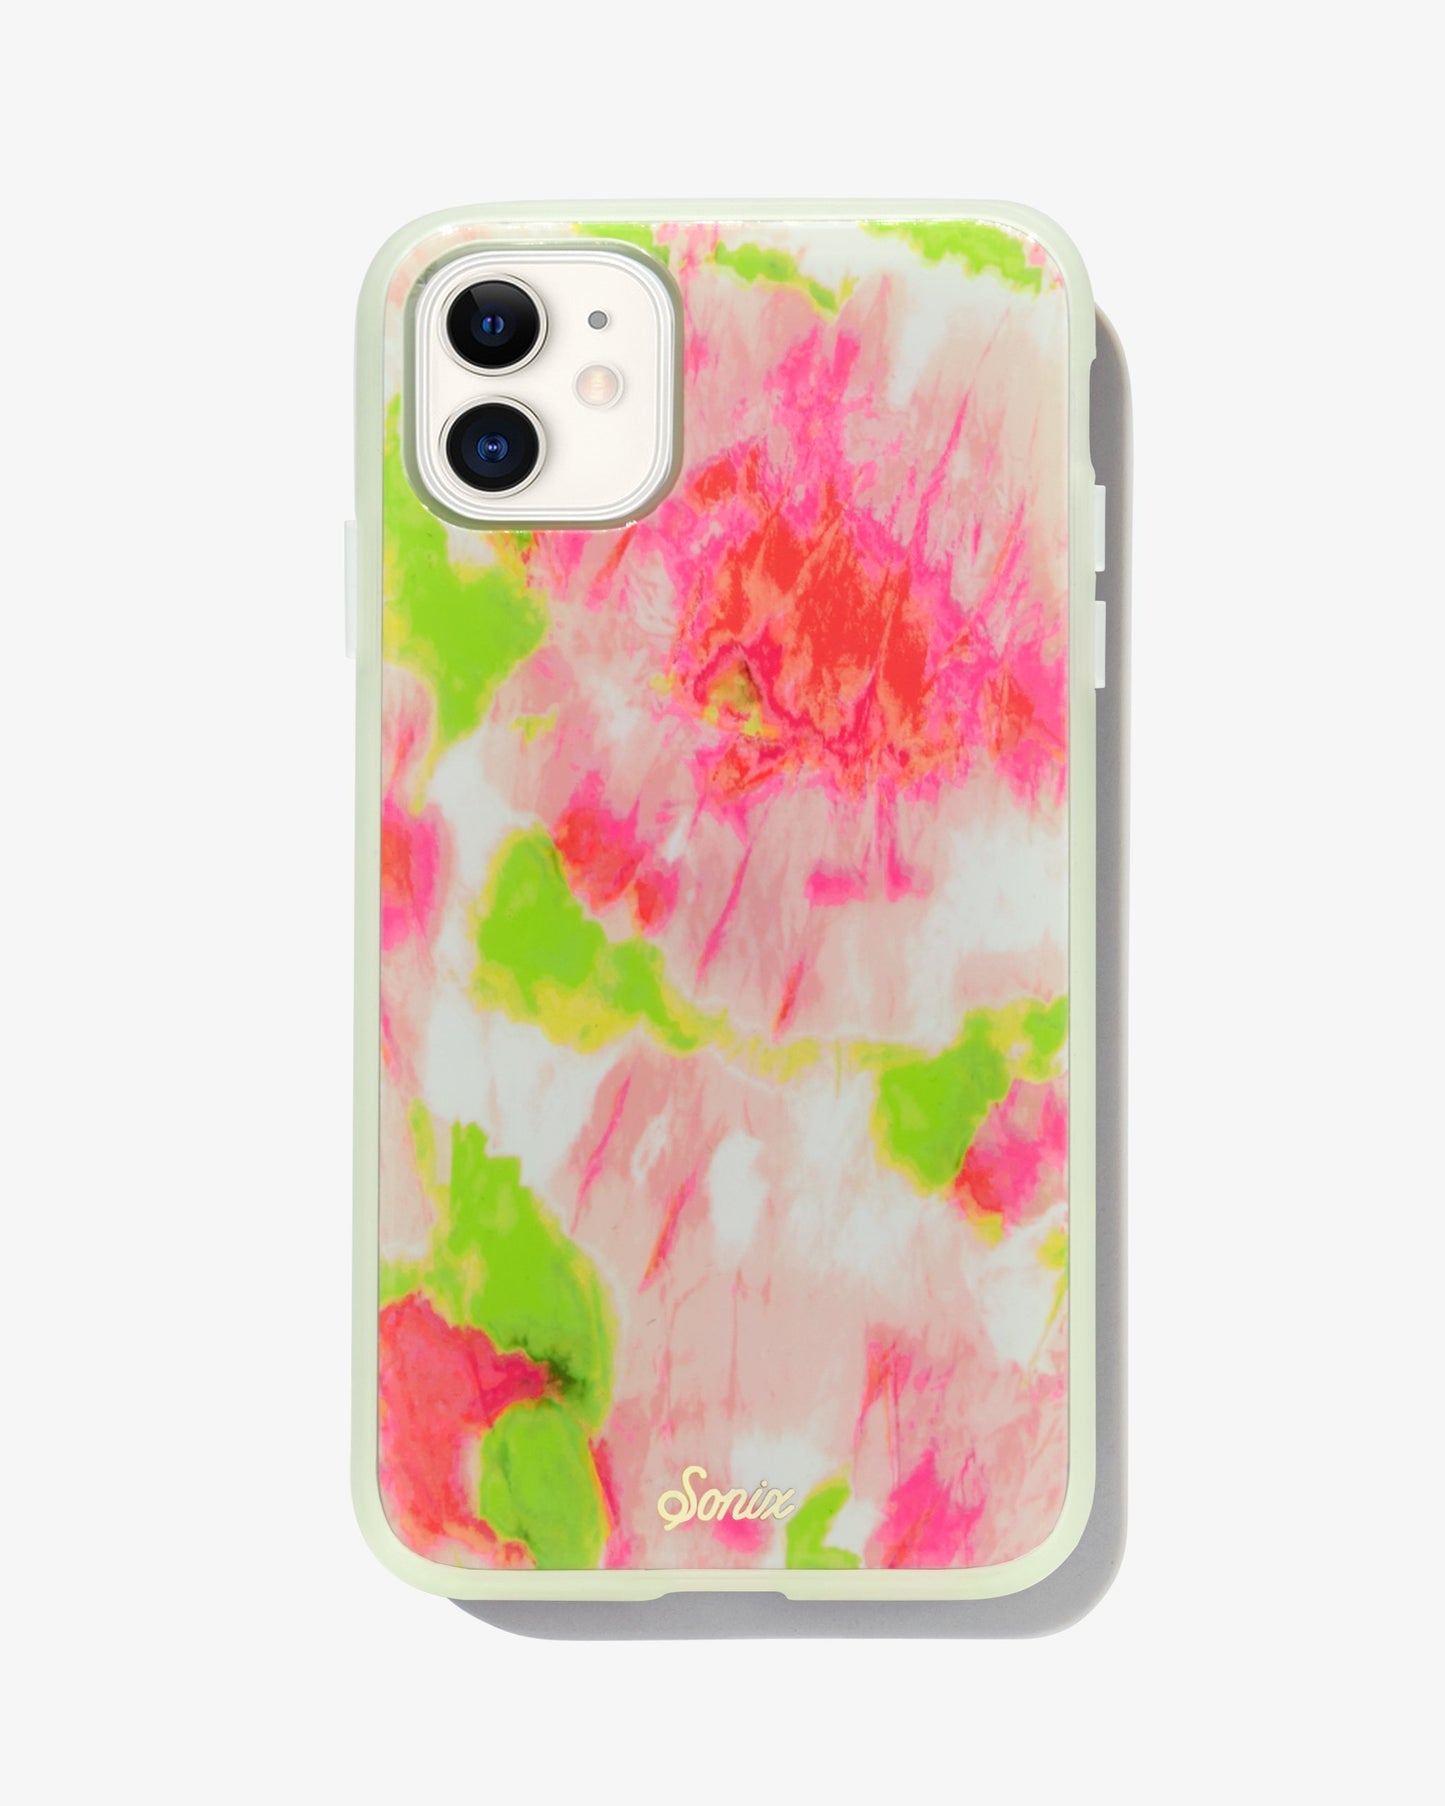 Watermelon Glow iPhone Case